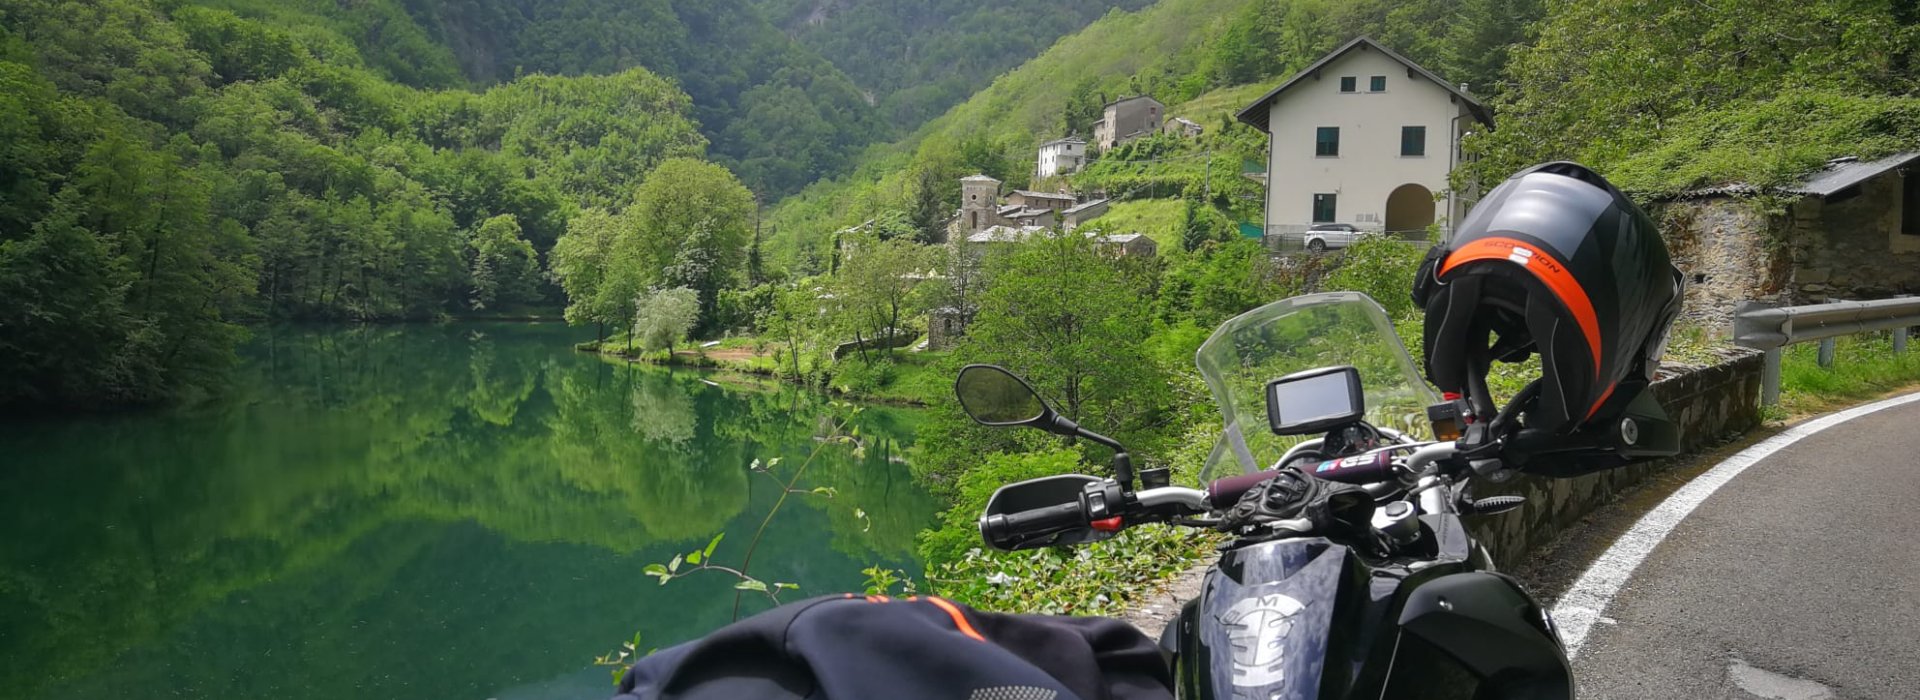 Motorbike tour in Garfagnana